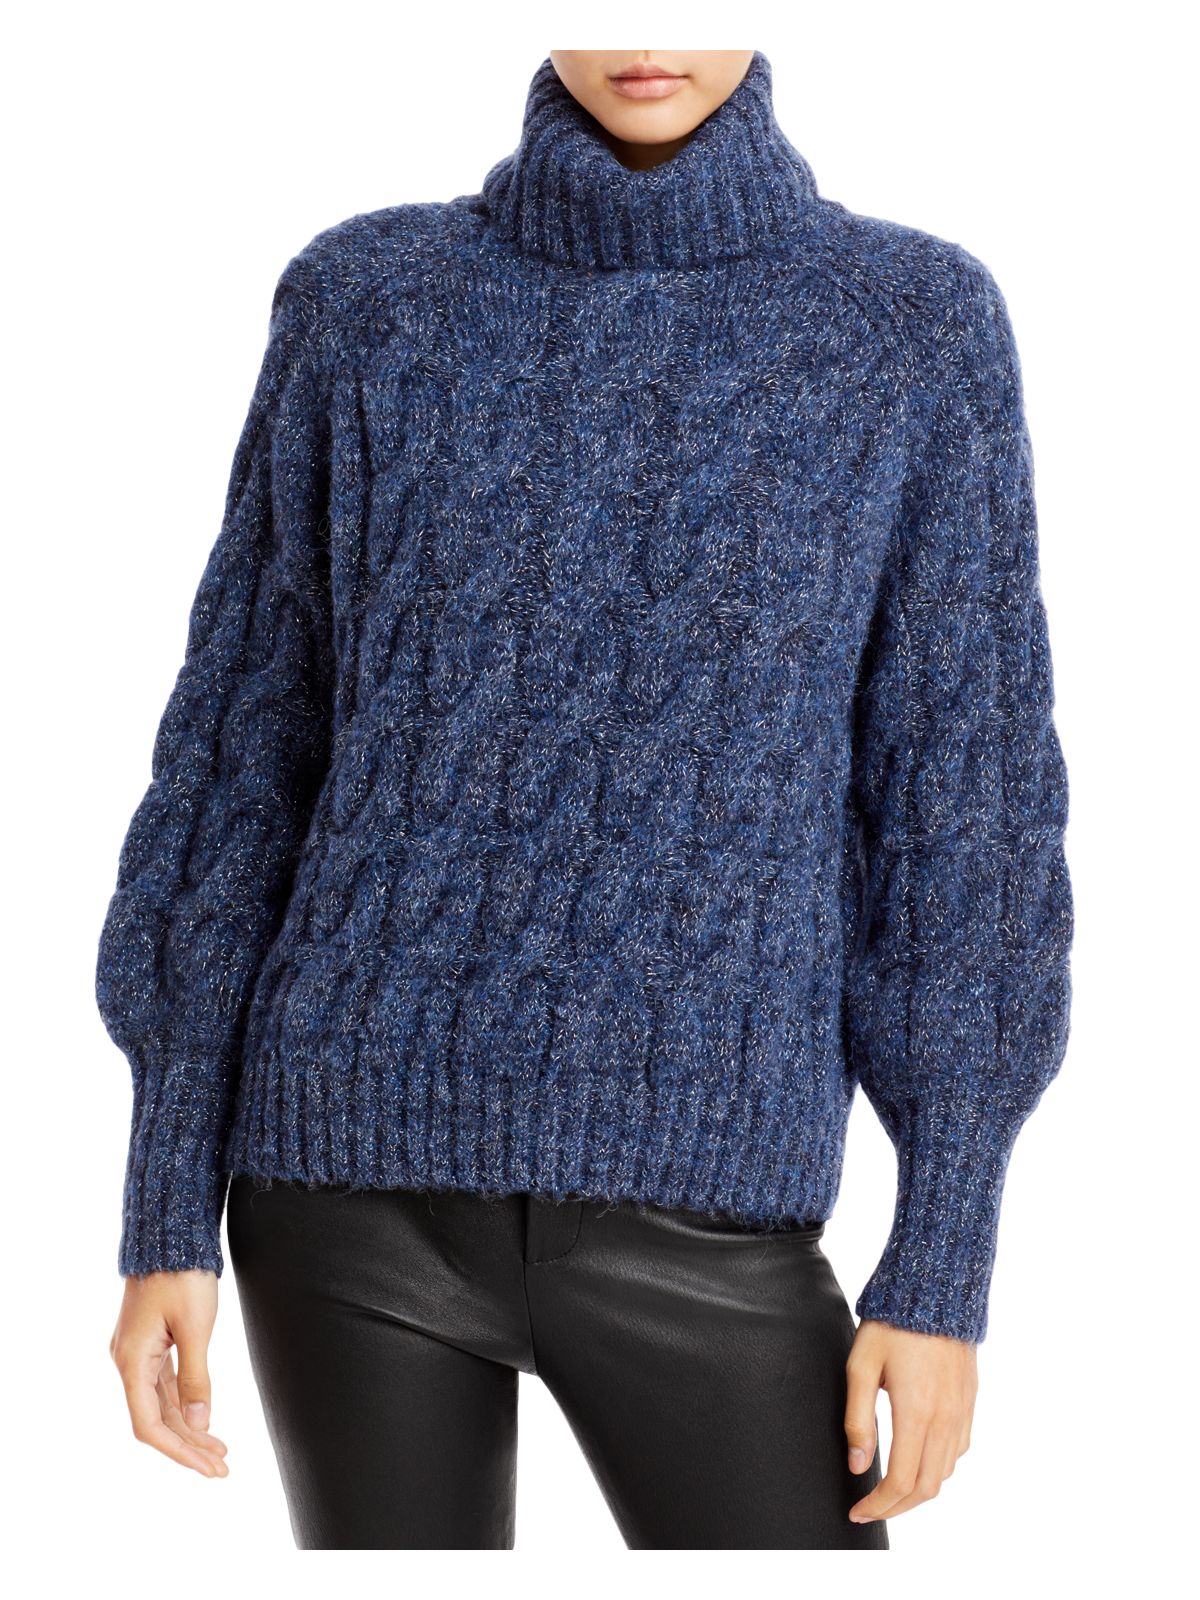 CLICHE' Womens Navy Metallic Long Sleeve Cowl Neck Wear To Work Sweater XS